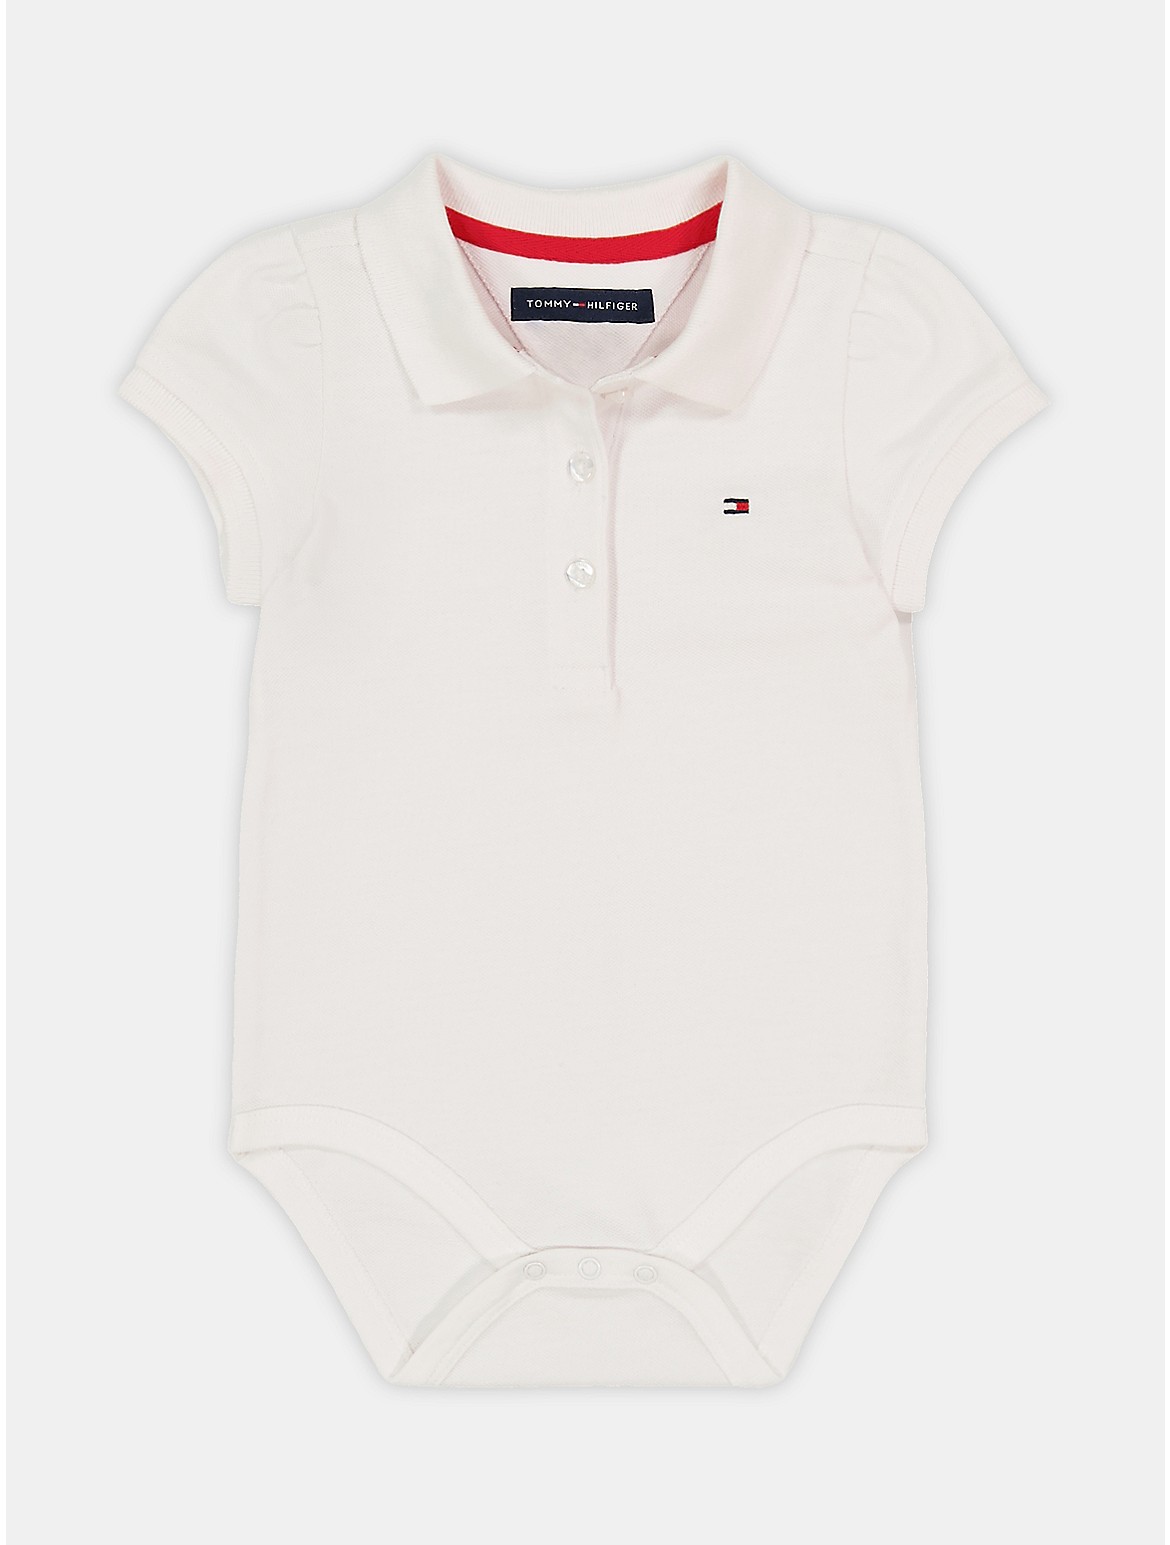 Tommy Hilfiger Girls' Babies' Solid Bodysuit - White - 12M